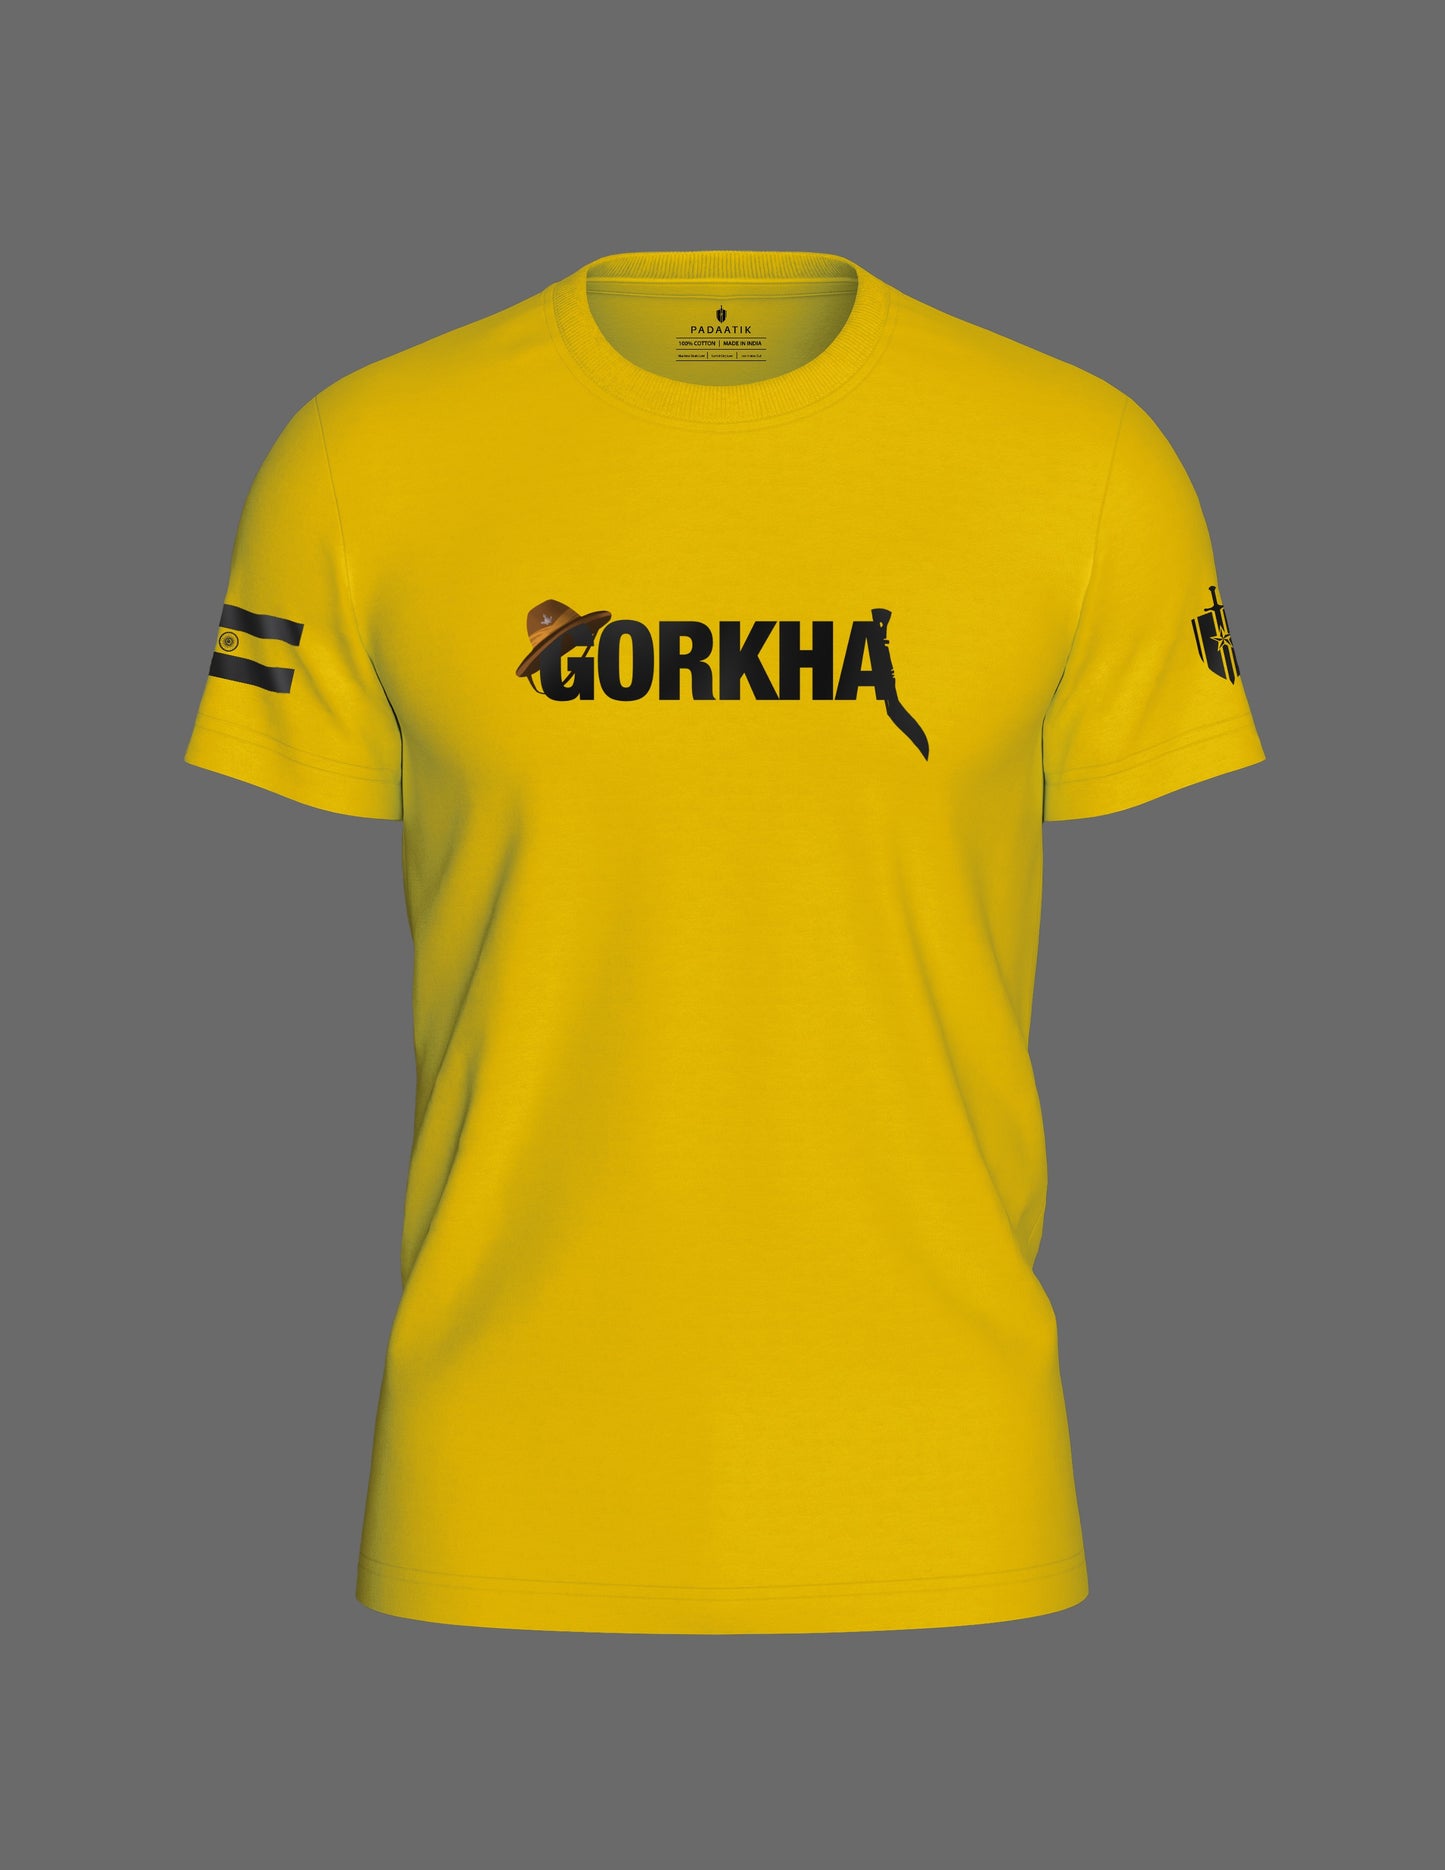 GORKHA | T-SHIRT